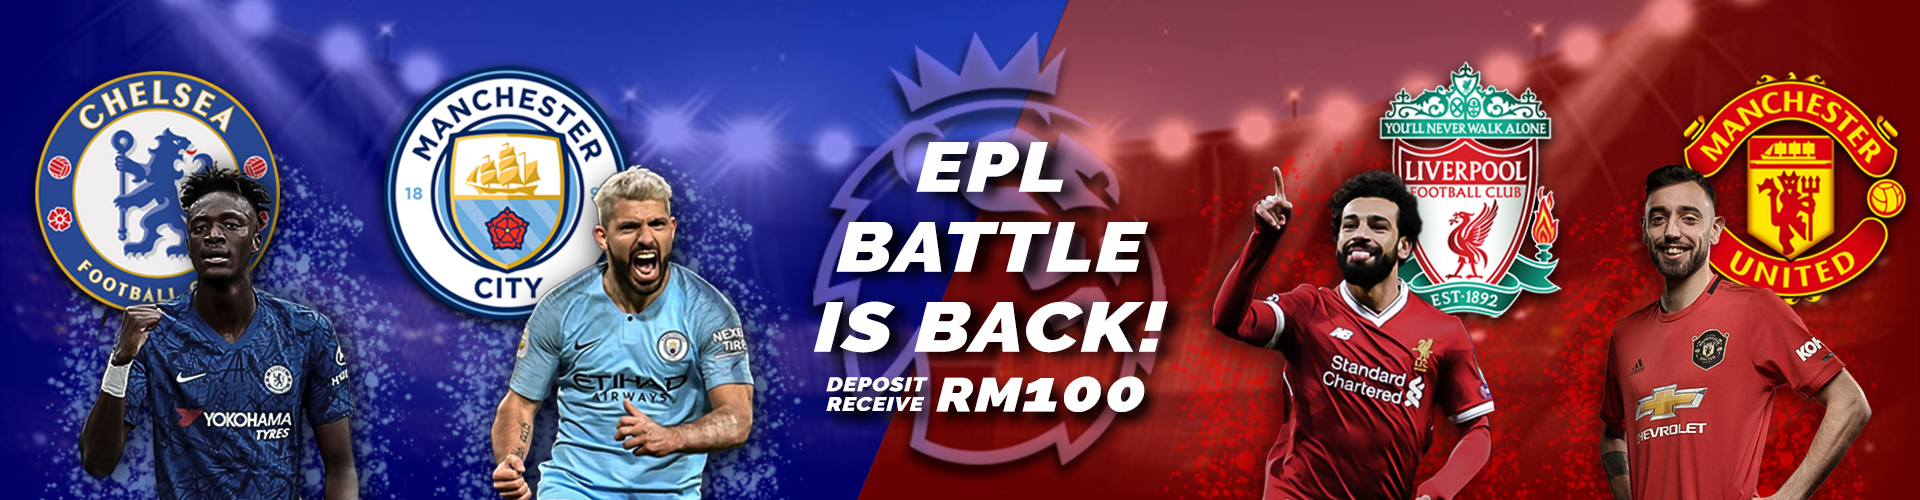 EPL BATTLE IS BACK! DEPOSIT RM100 RECEIVE RM100